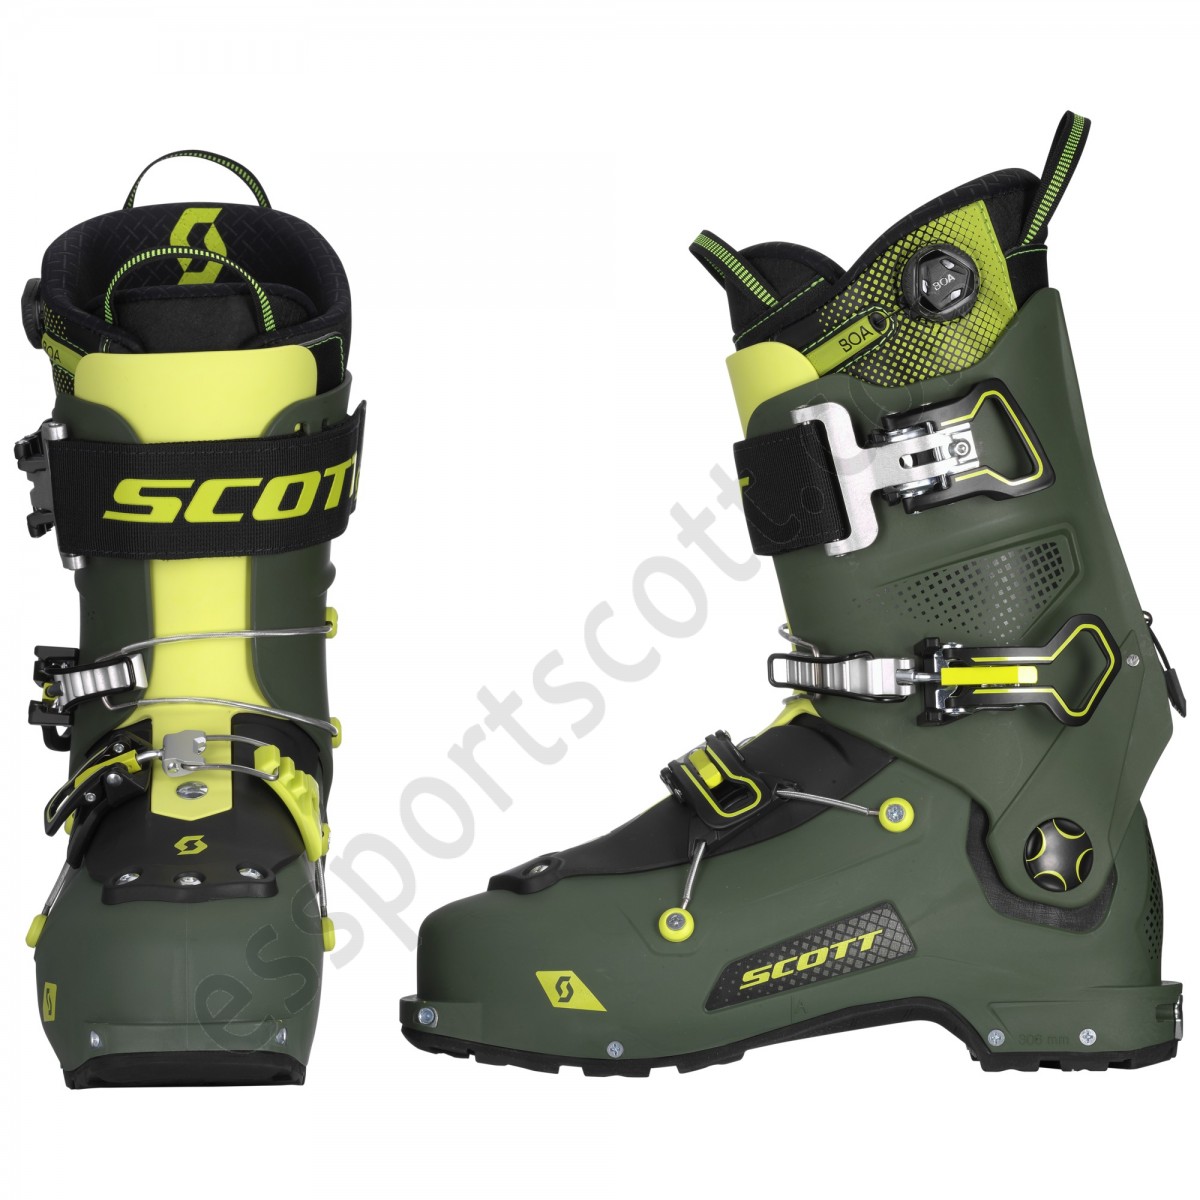 Scott Tienda ◇ Freeguide Carbon Ski Boot - -8